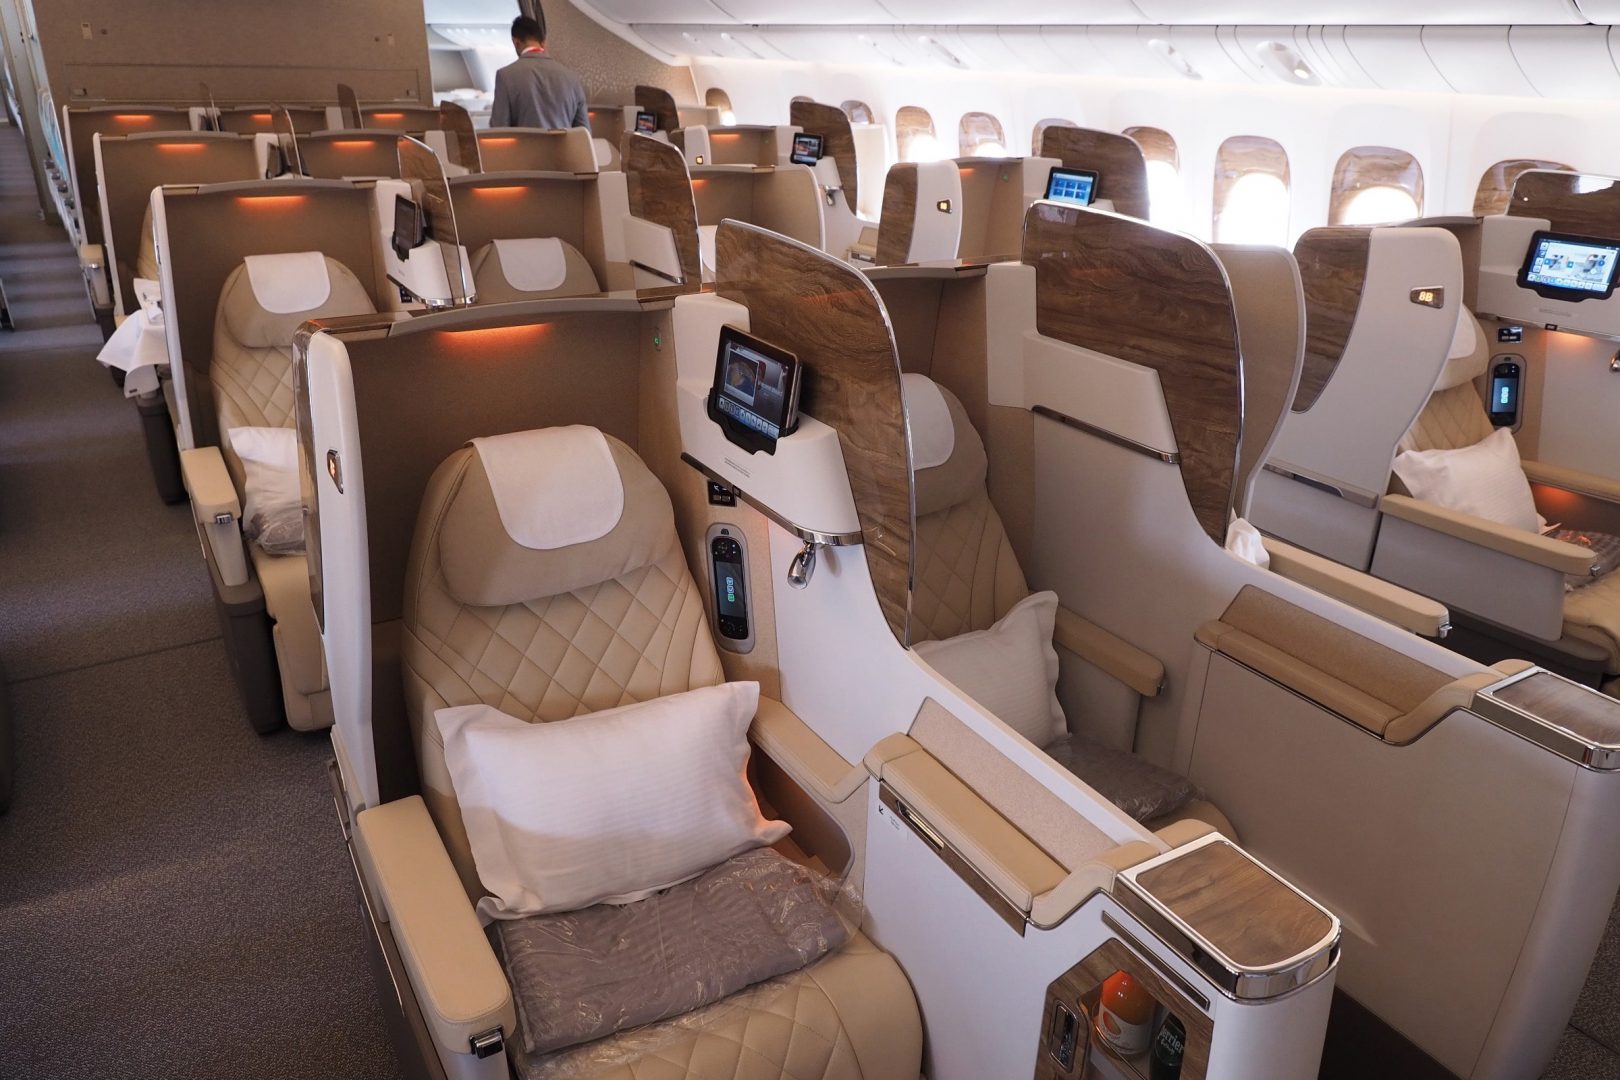 Emirates 777 New Business Class